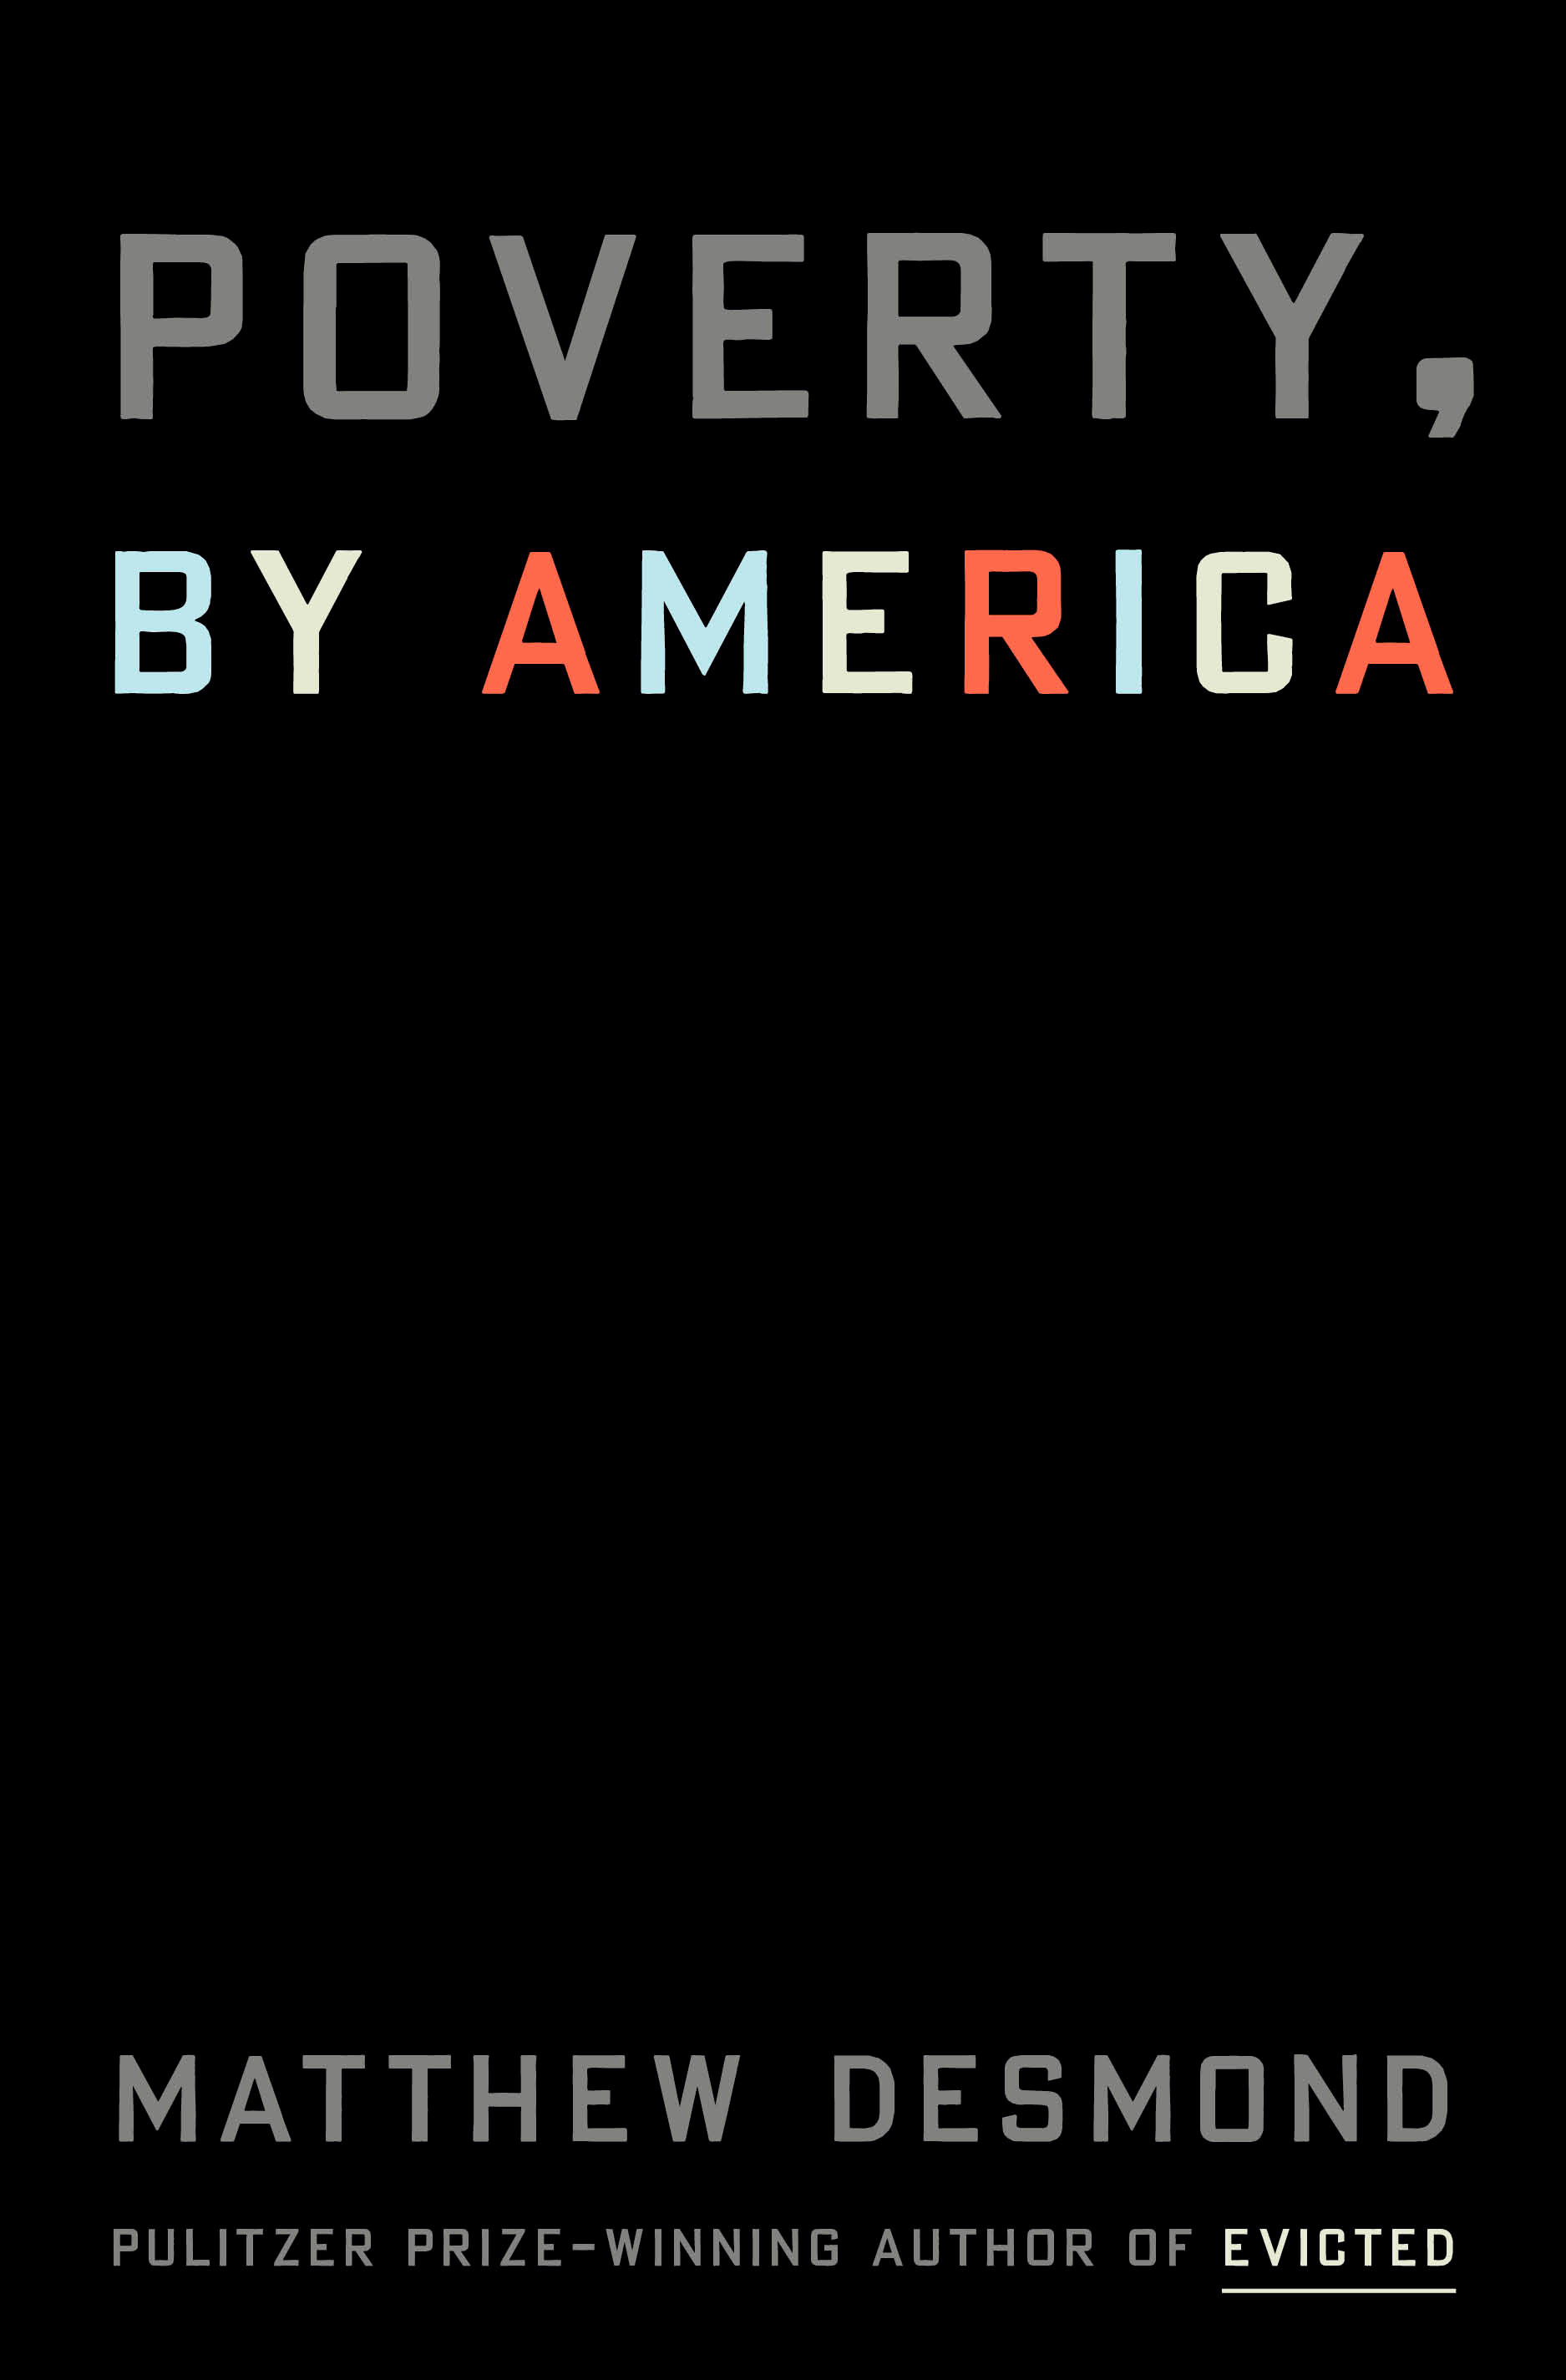 Poverty, by America by Matthew Desmond PDF Download